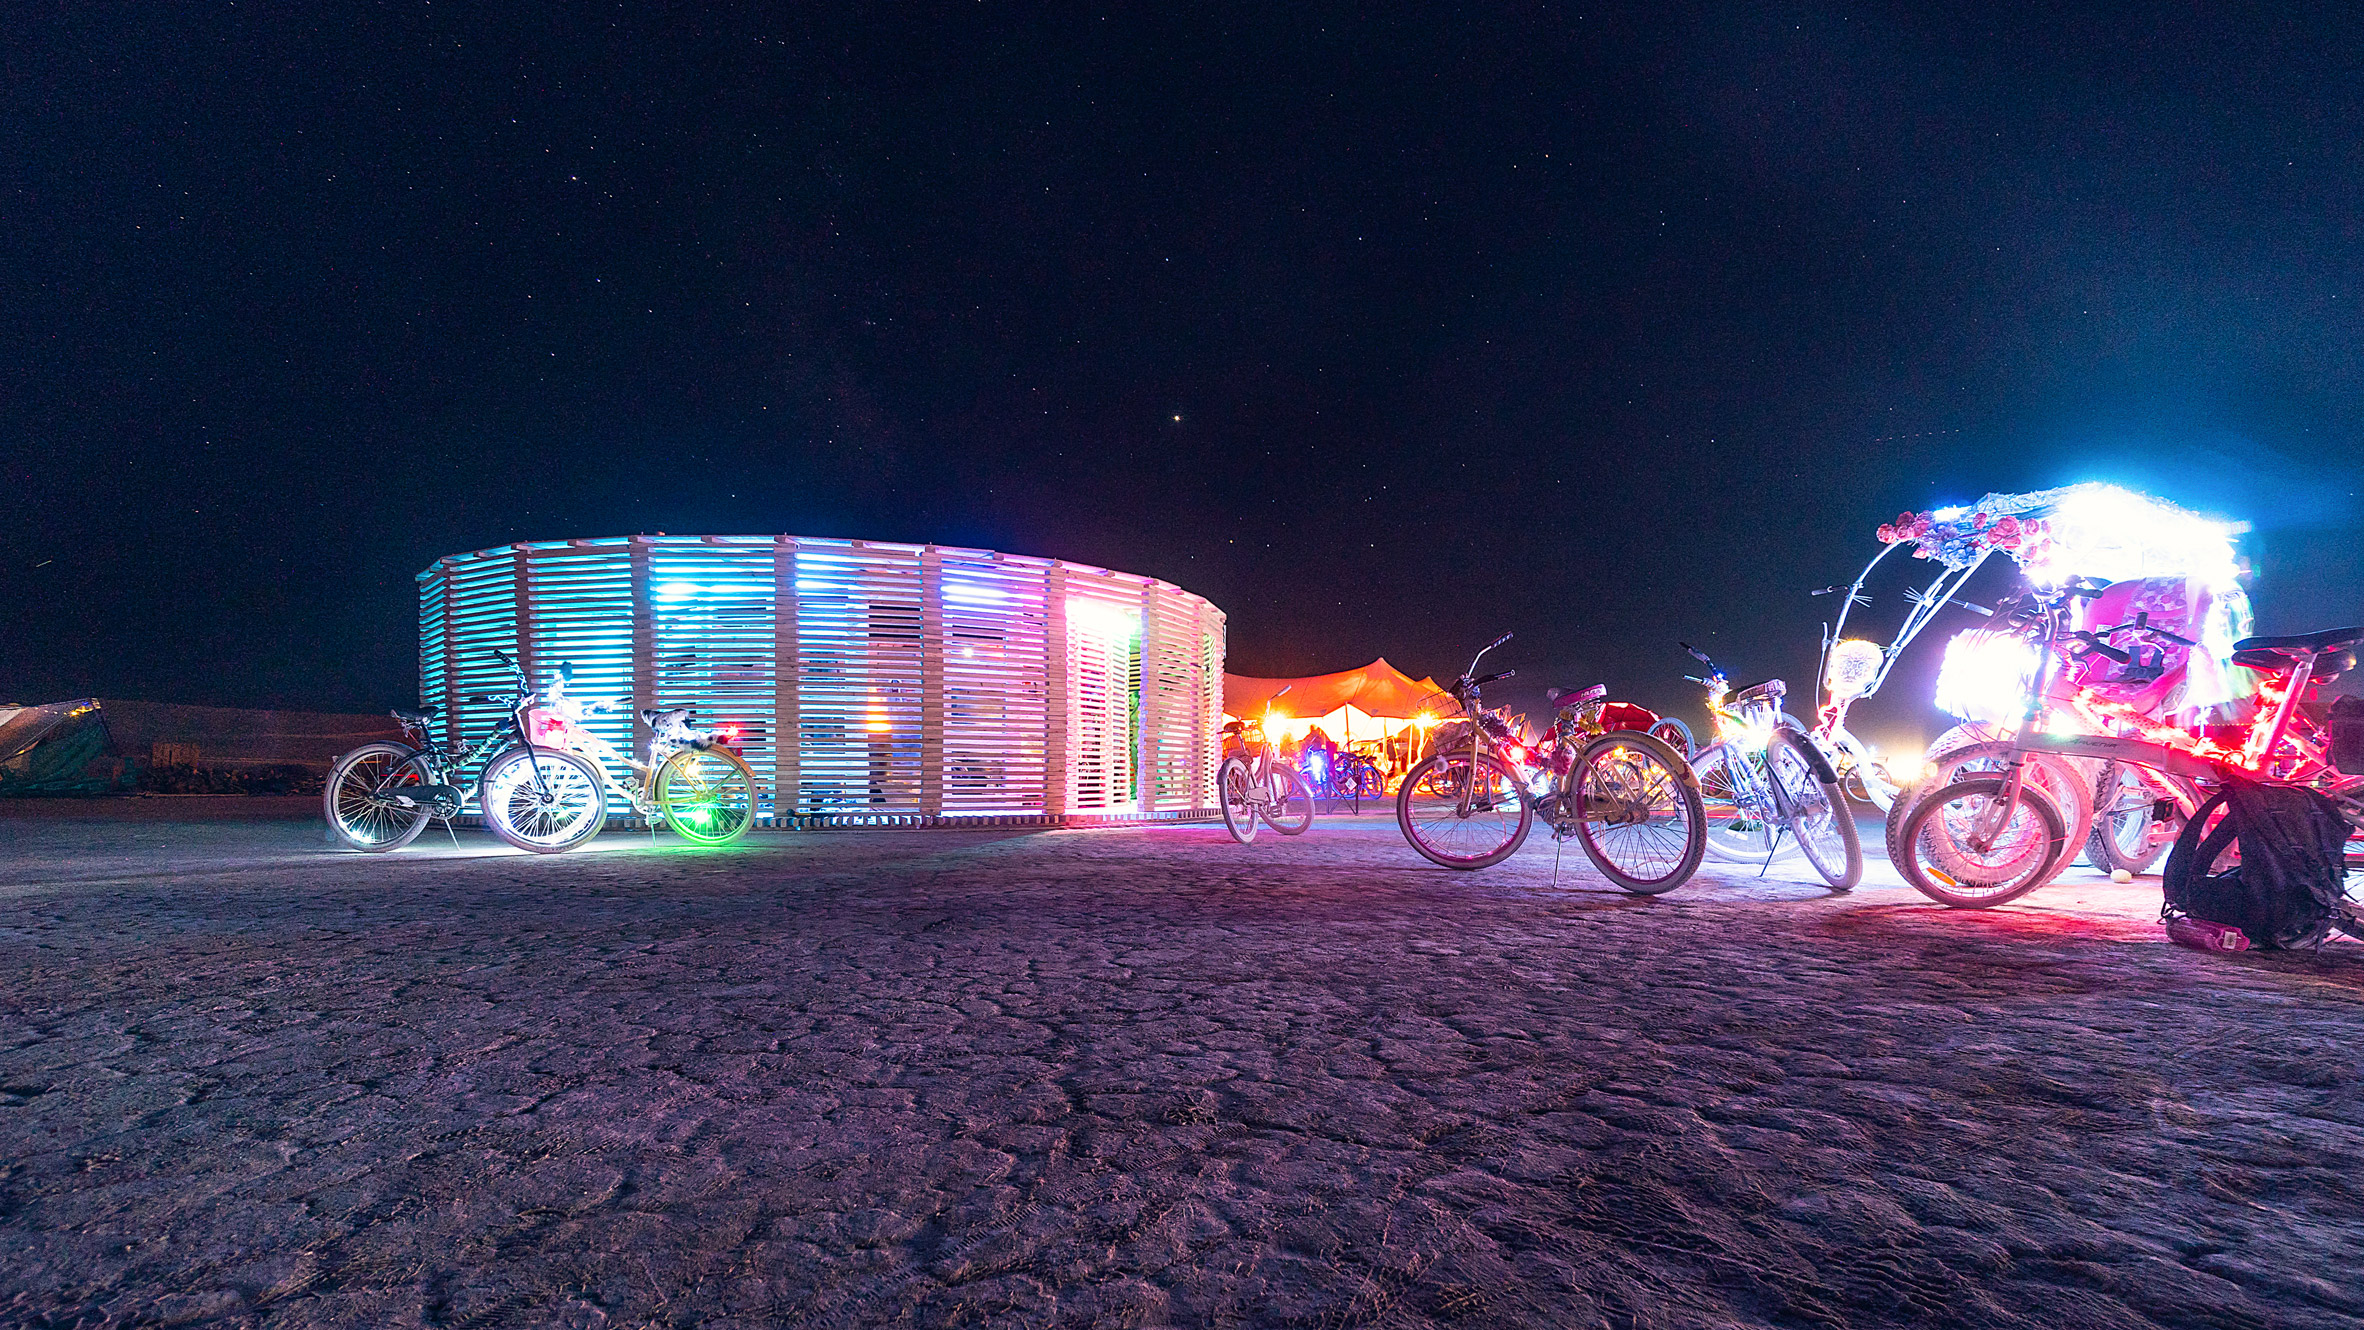 Burning Man Steam of Life by JKMM